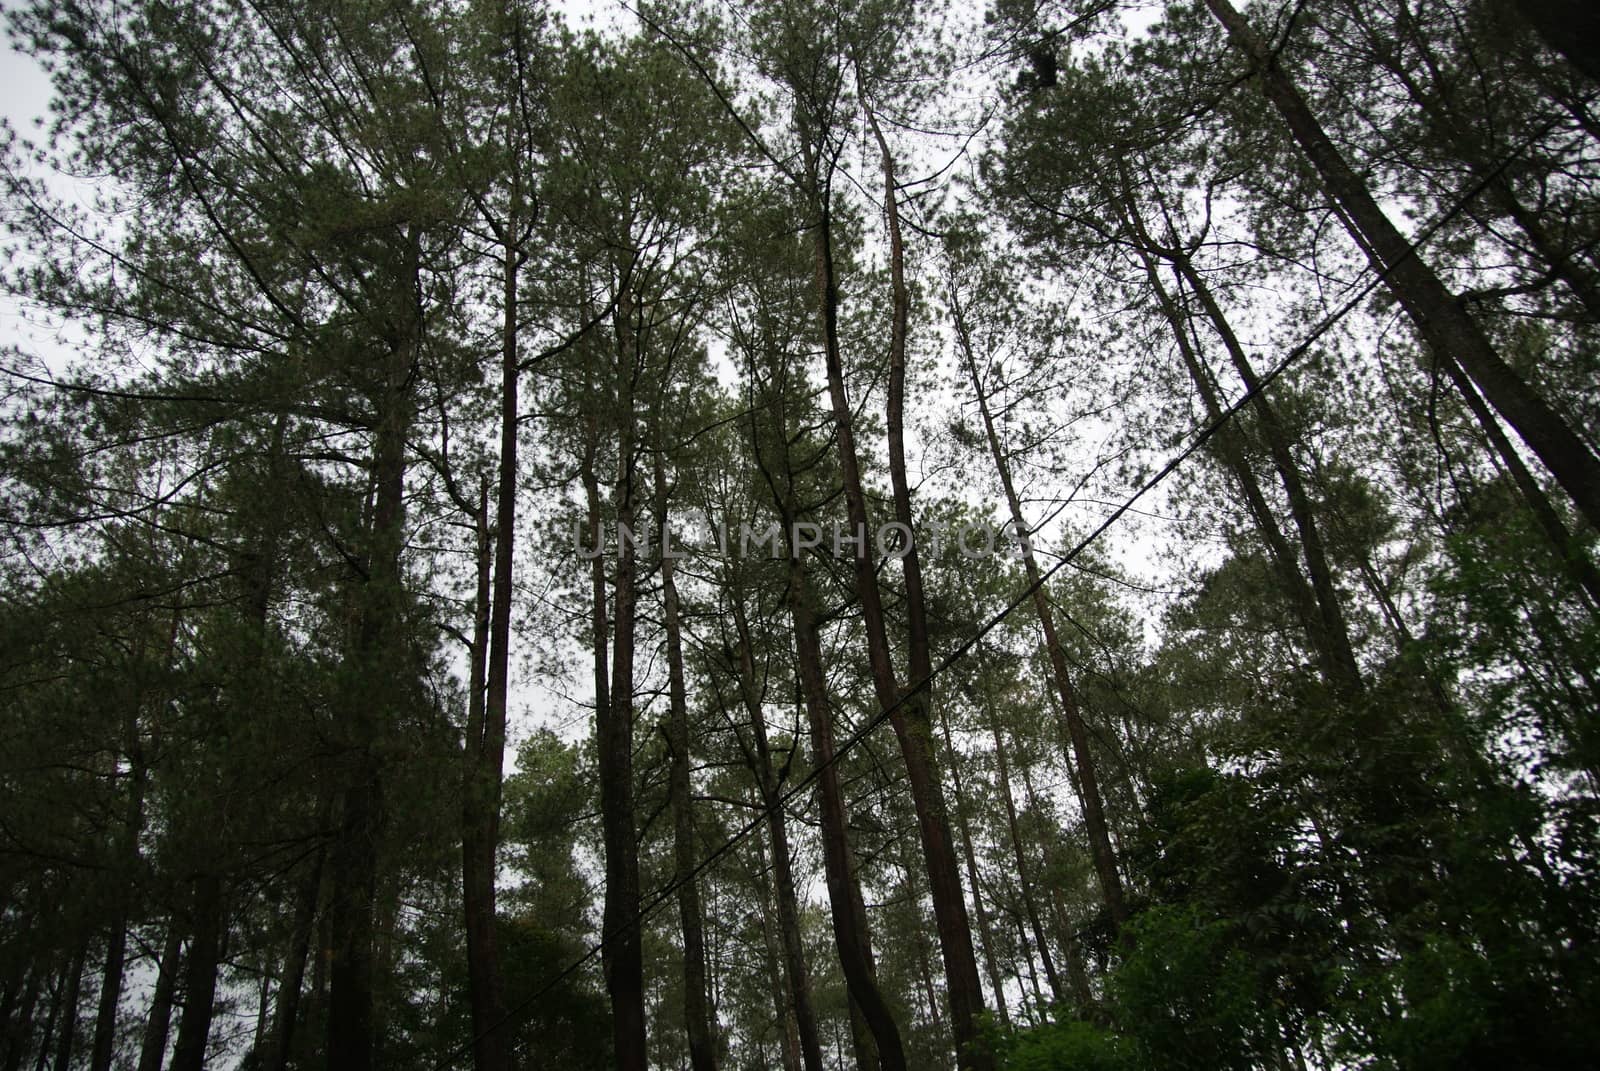 Tall tree of Bandung Rainforest along the road to Tangkuban Perahu by craigansibin